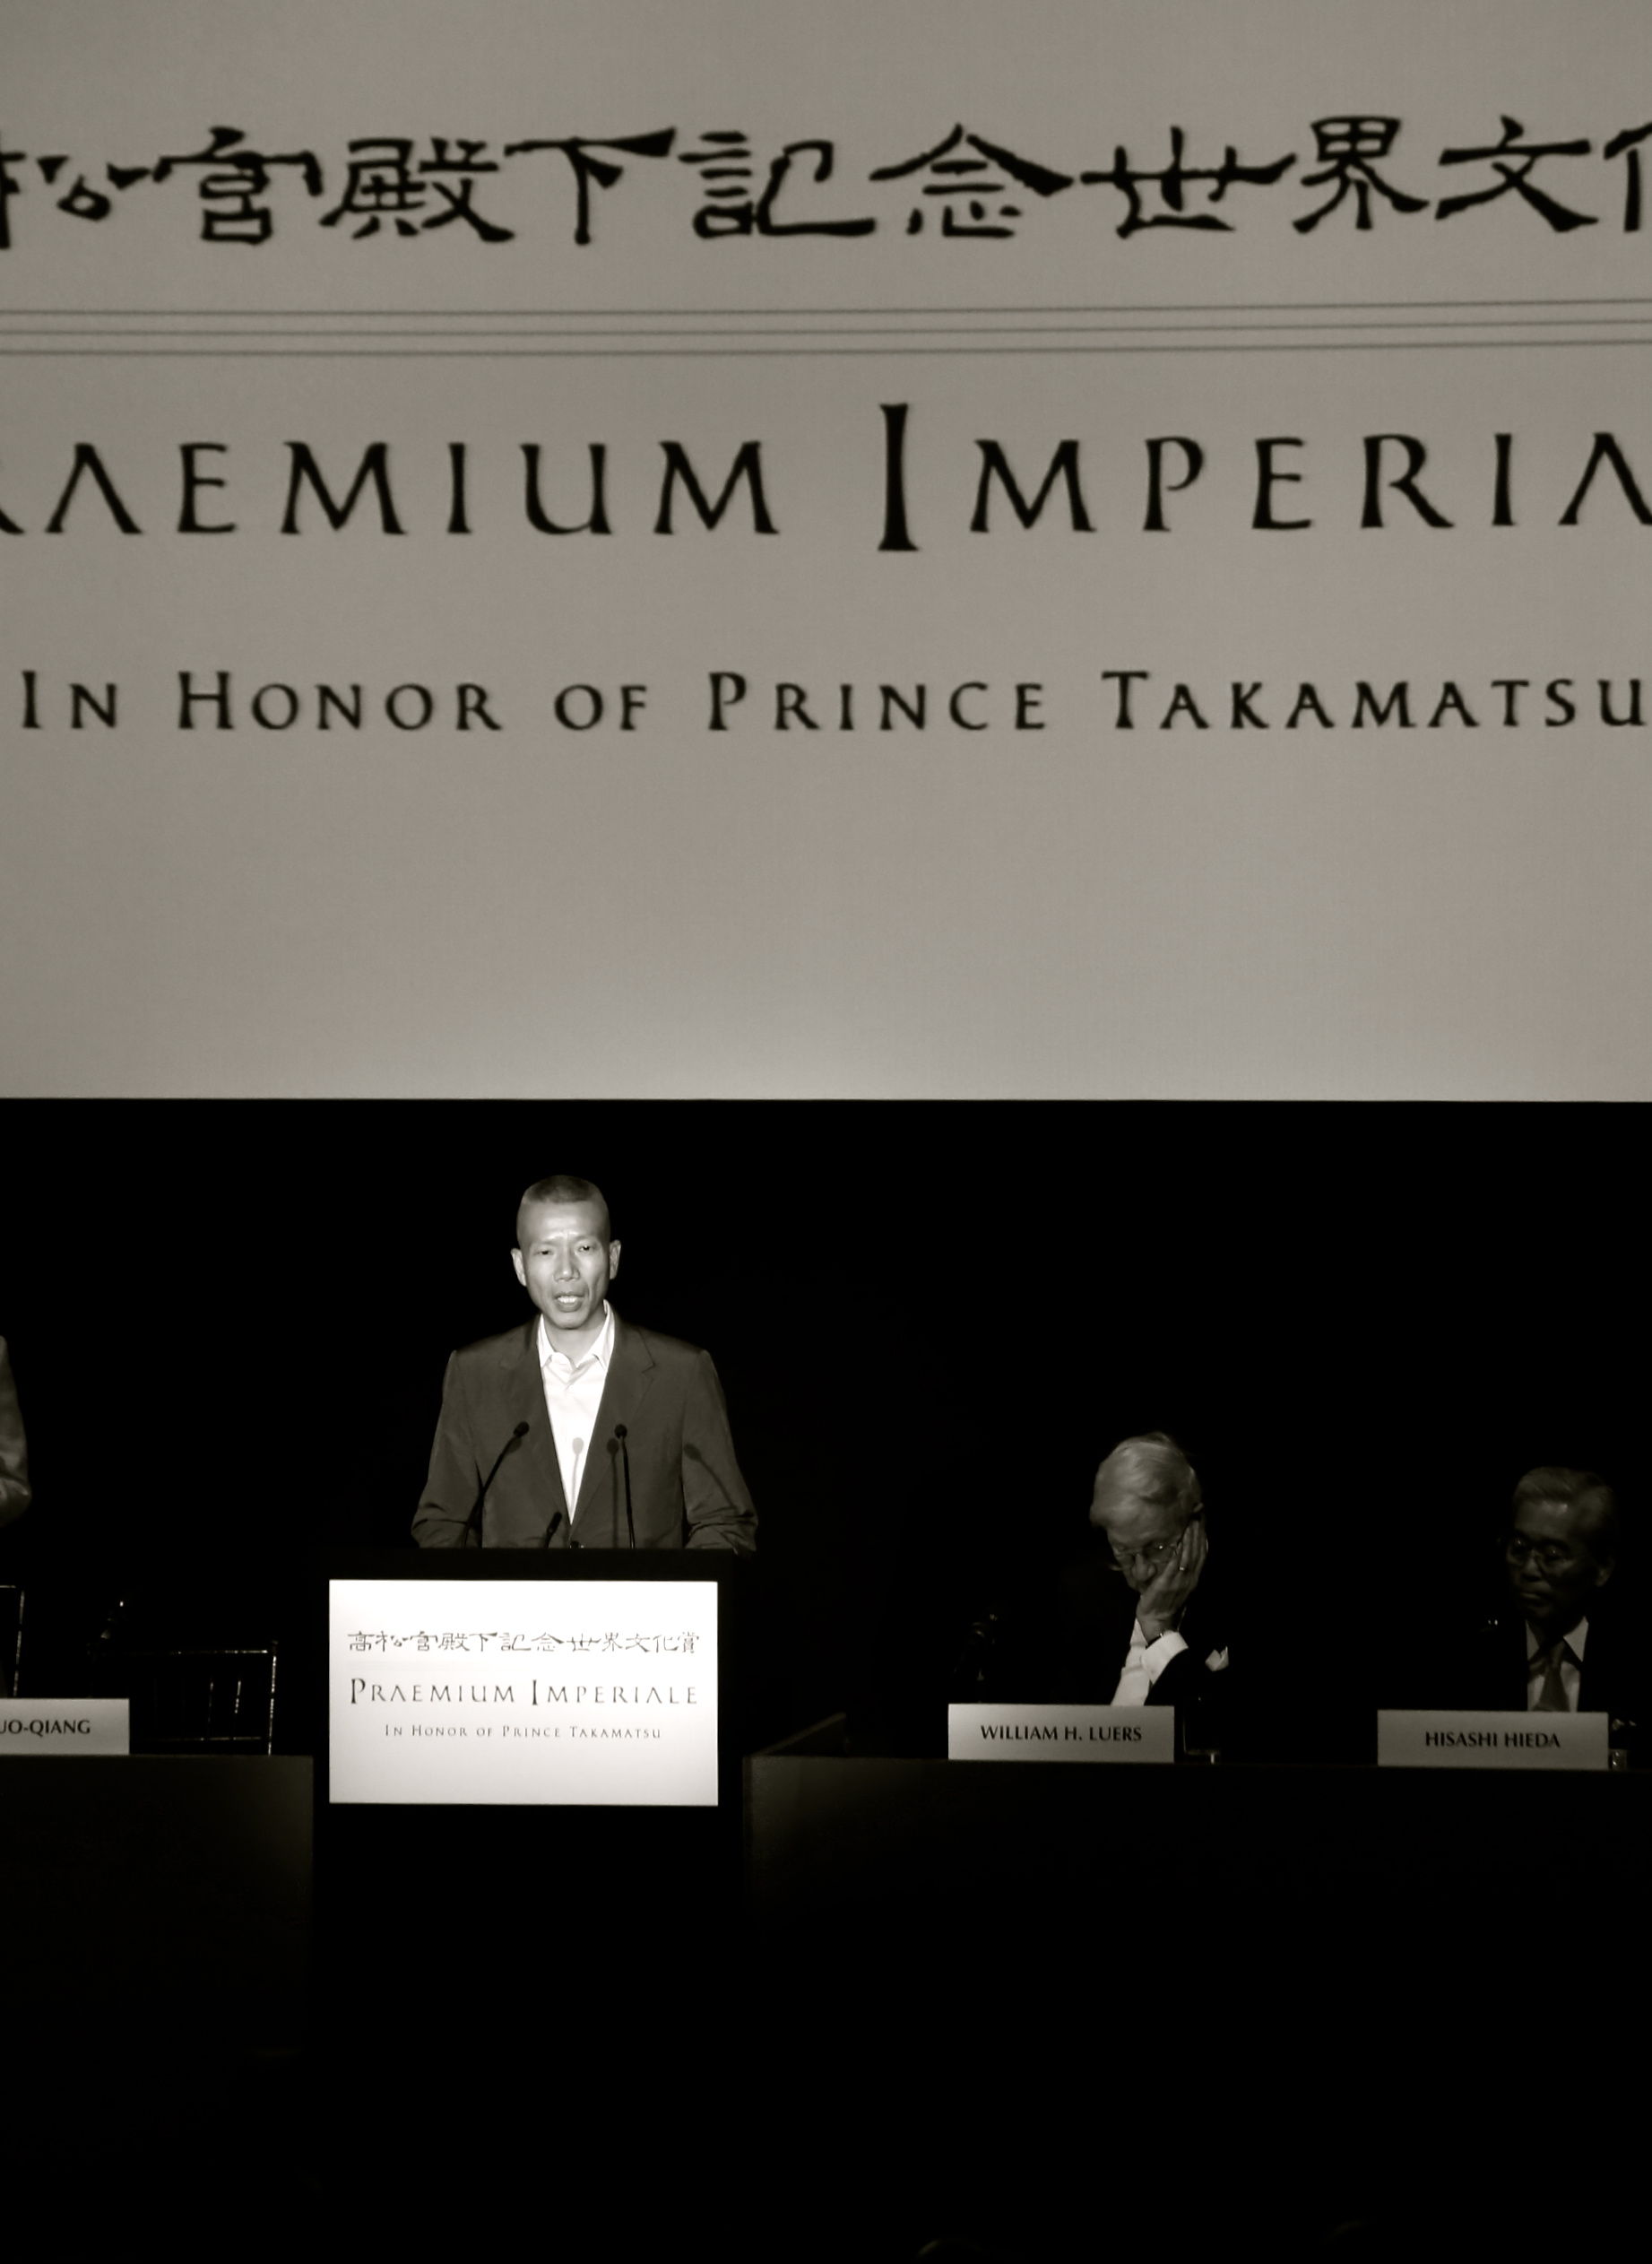 Steven Holl wins 2014 Praemium Imperiale Award